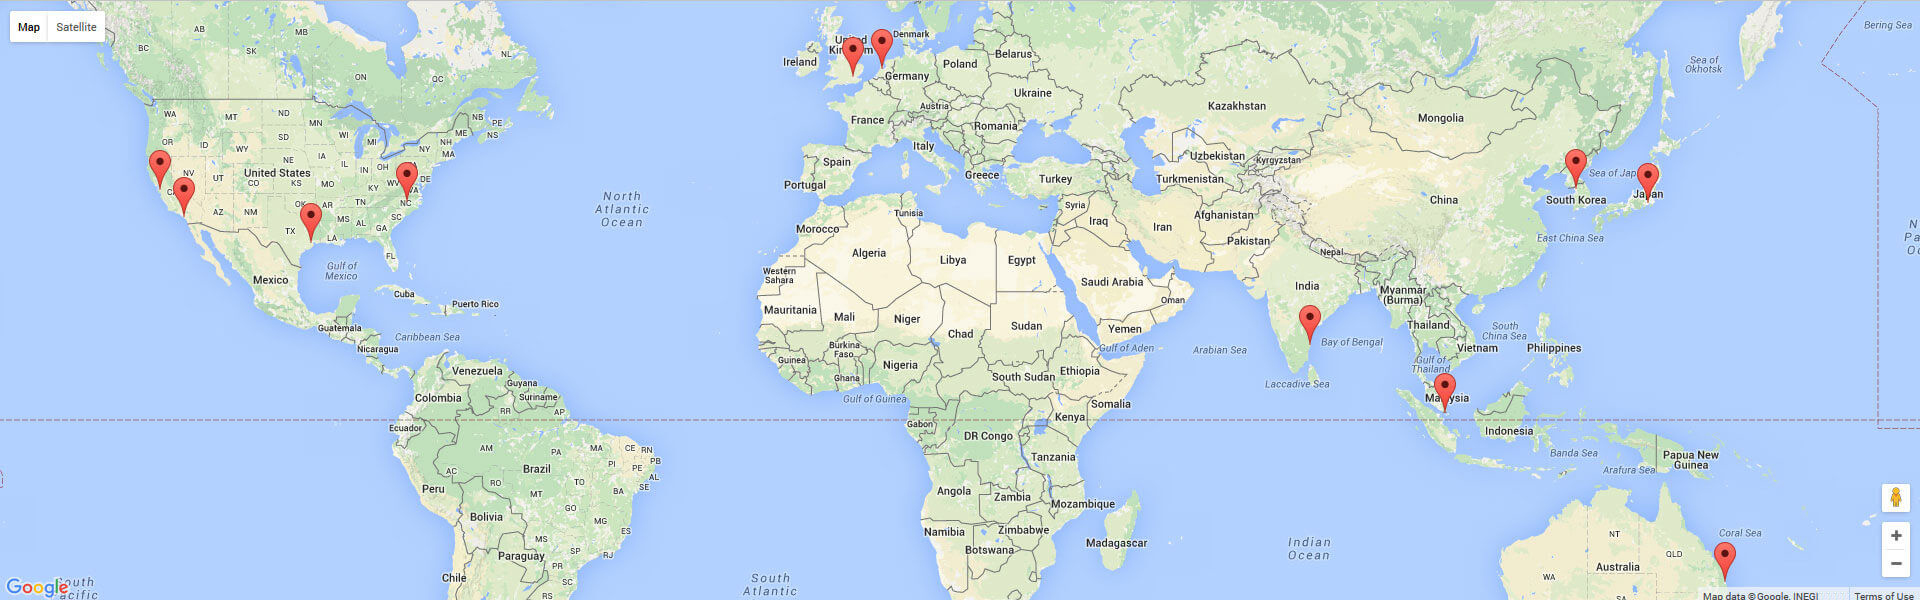 Corent Technology Inc,. Worldwide Locations